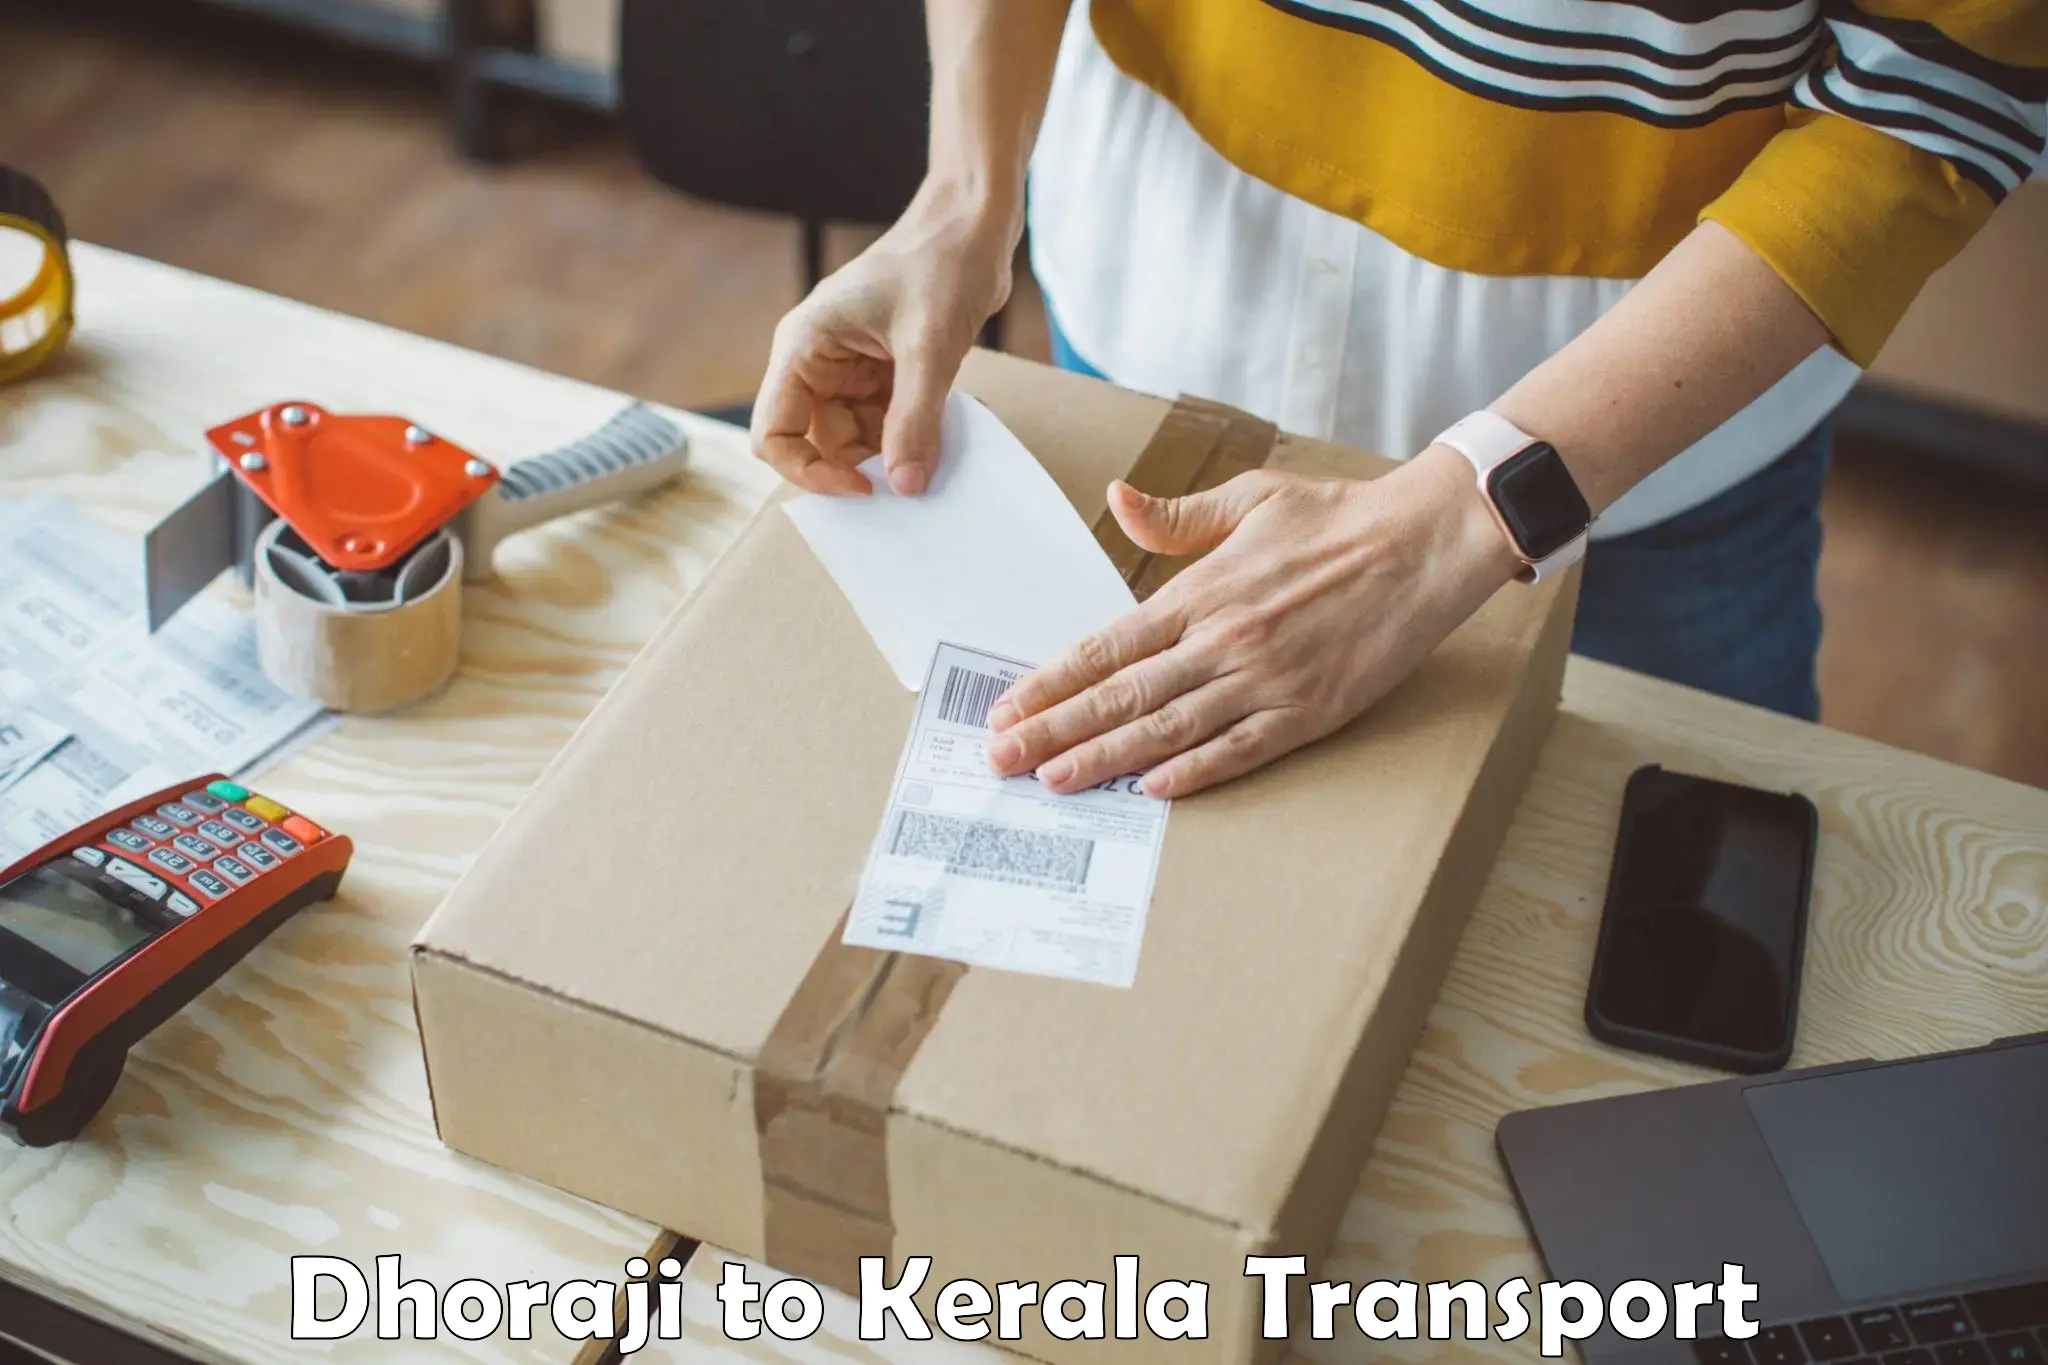 Daily parcel service transport Dhoraji to Thiruvananthapuram